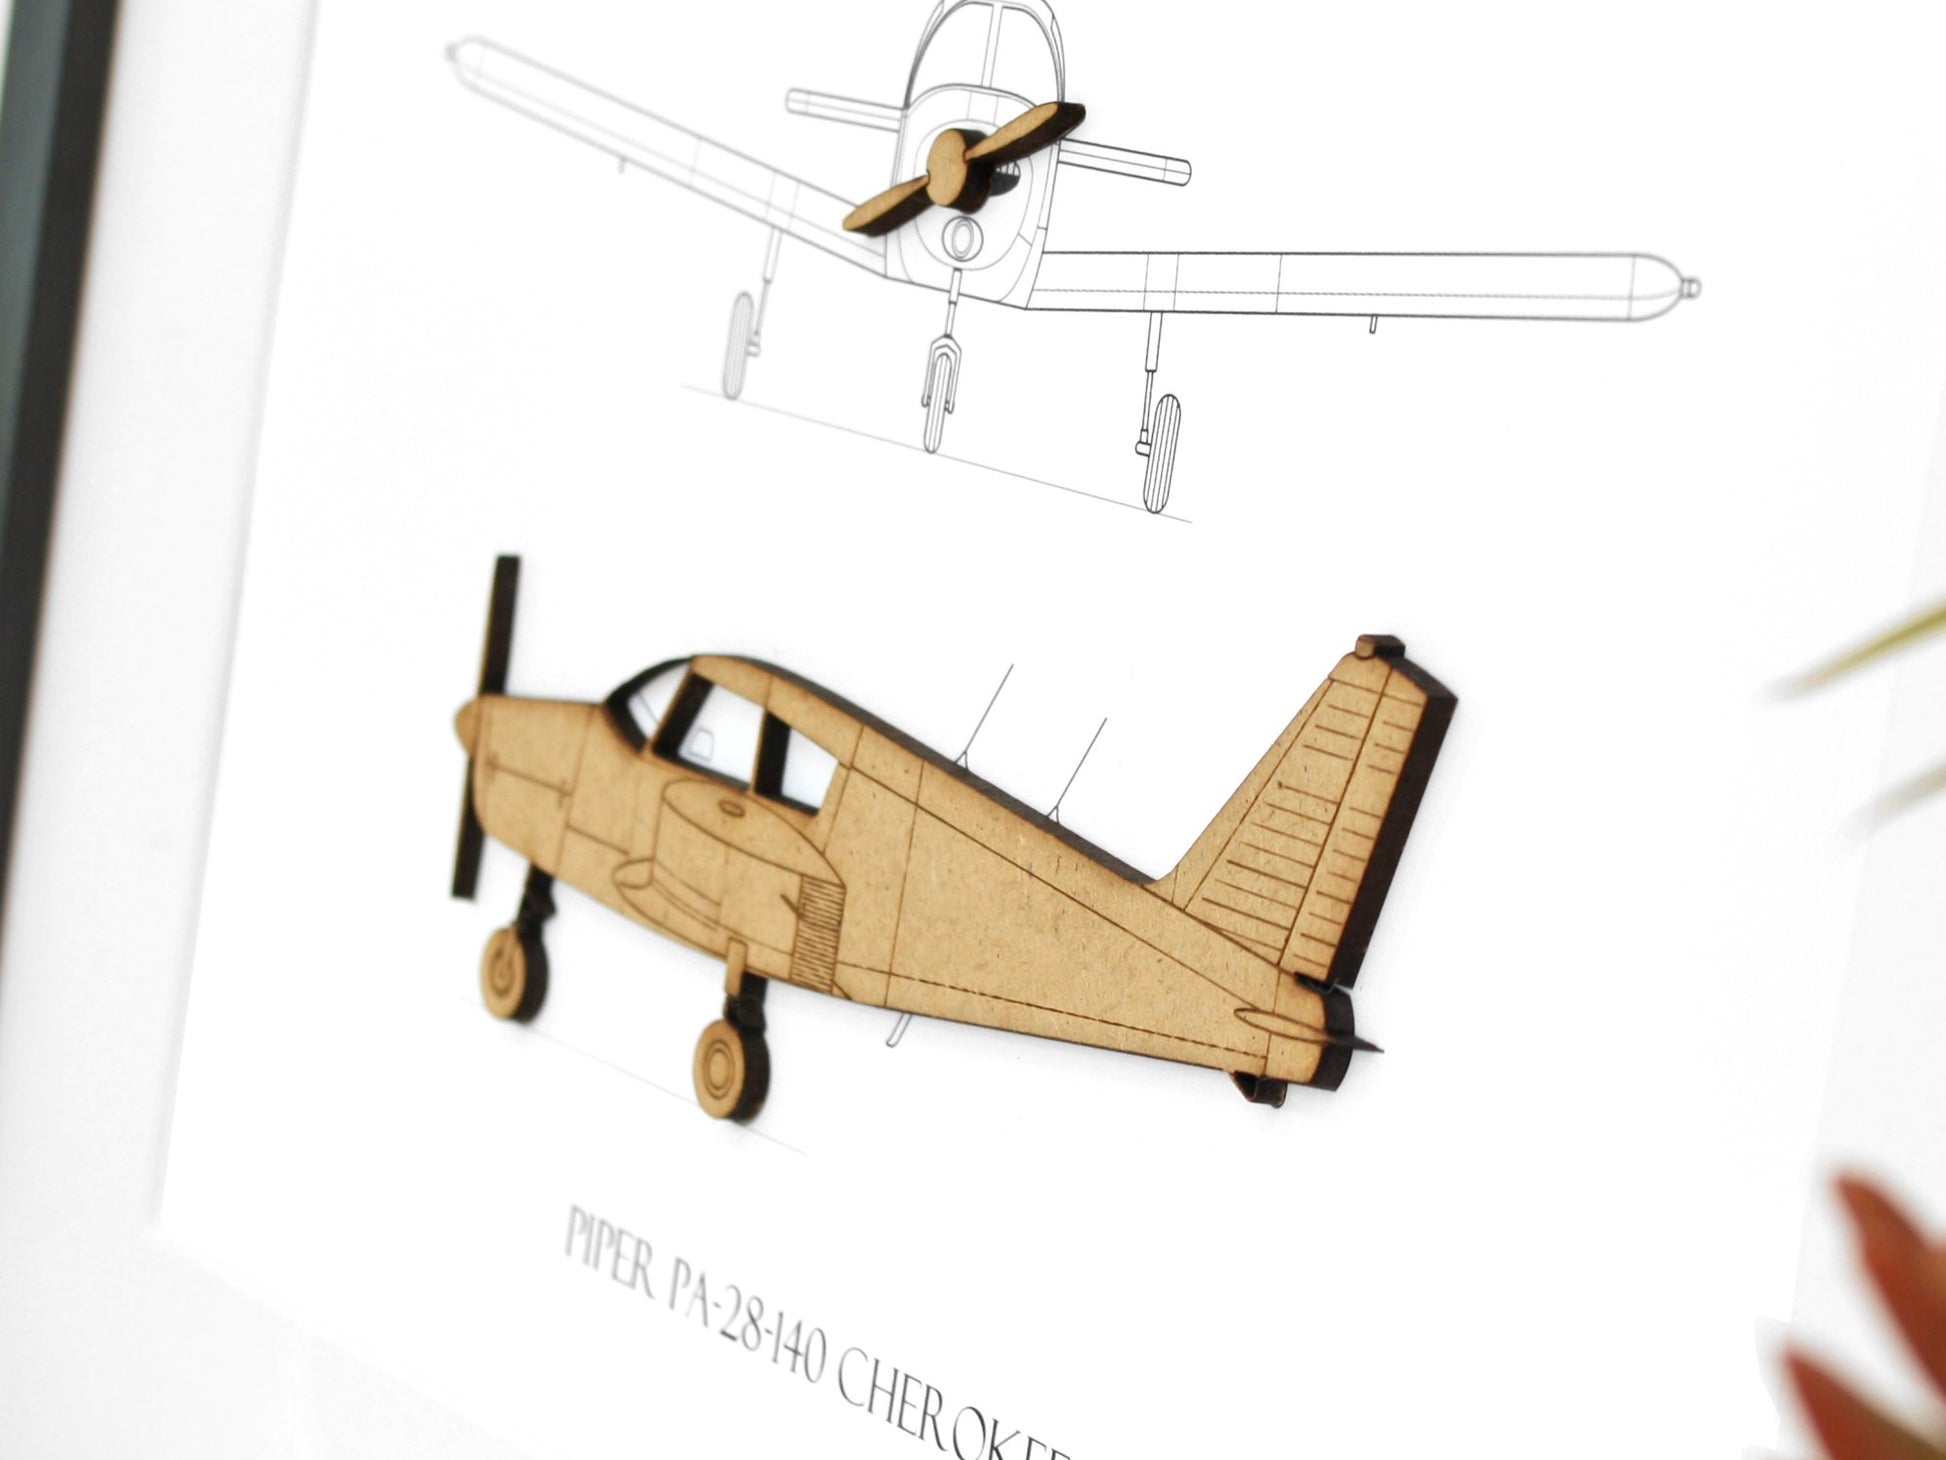 Piper PA-28-140 Cherokee blueprint art